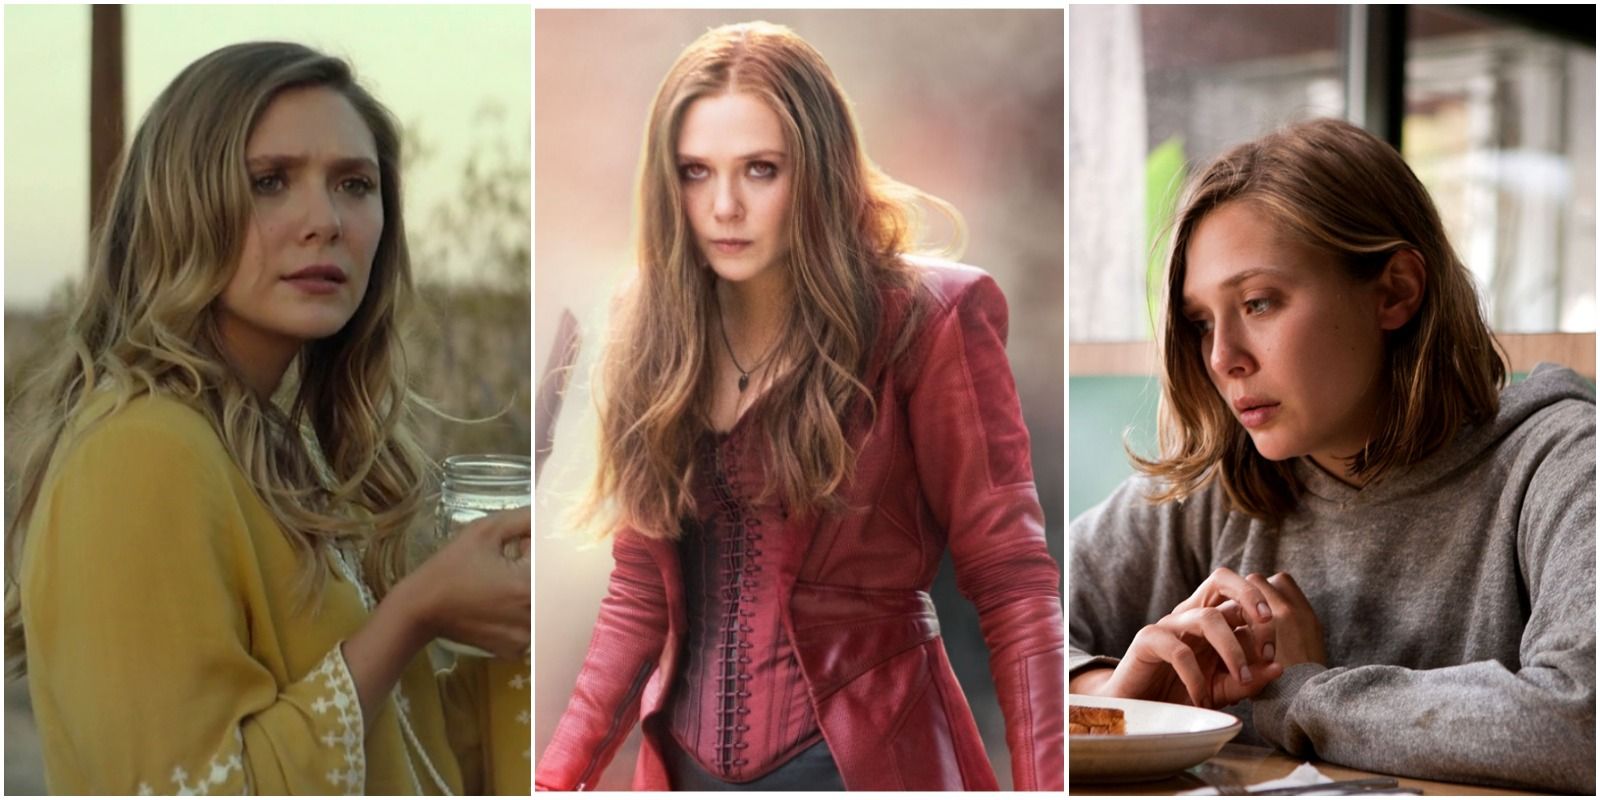 Elizabeth Olsen’s 10 Best Movies Ranked According To IMDb